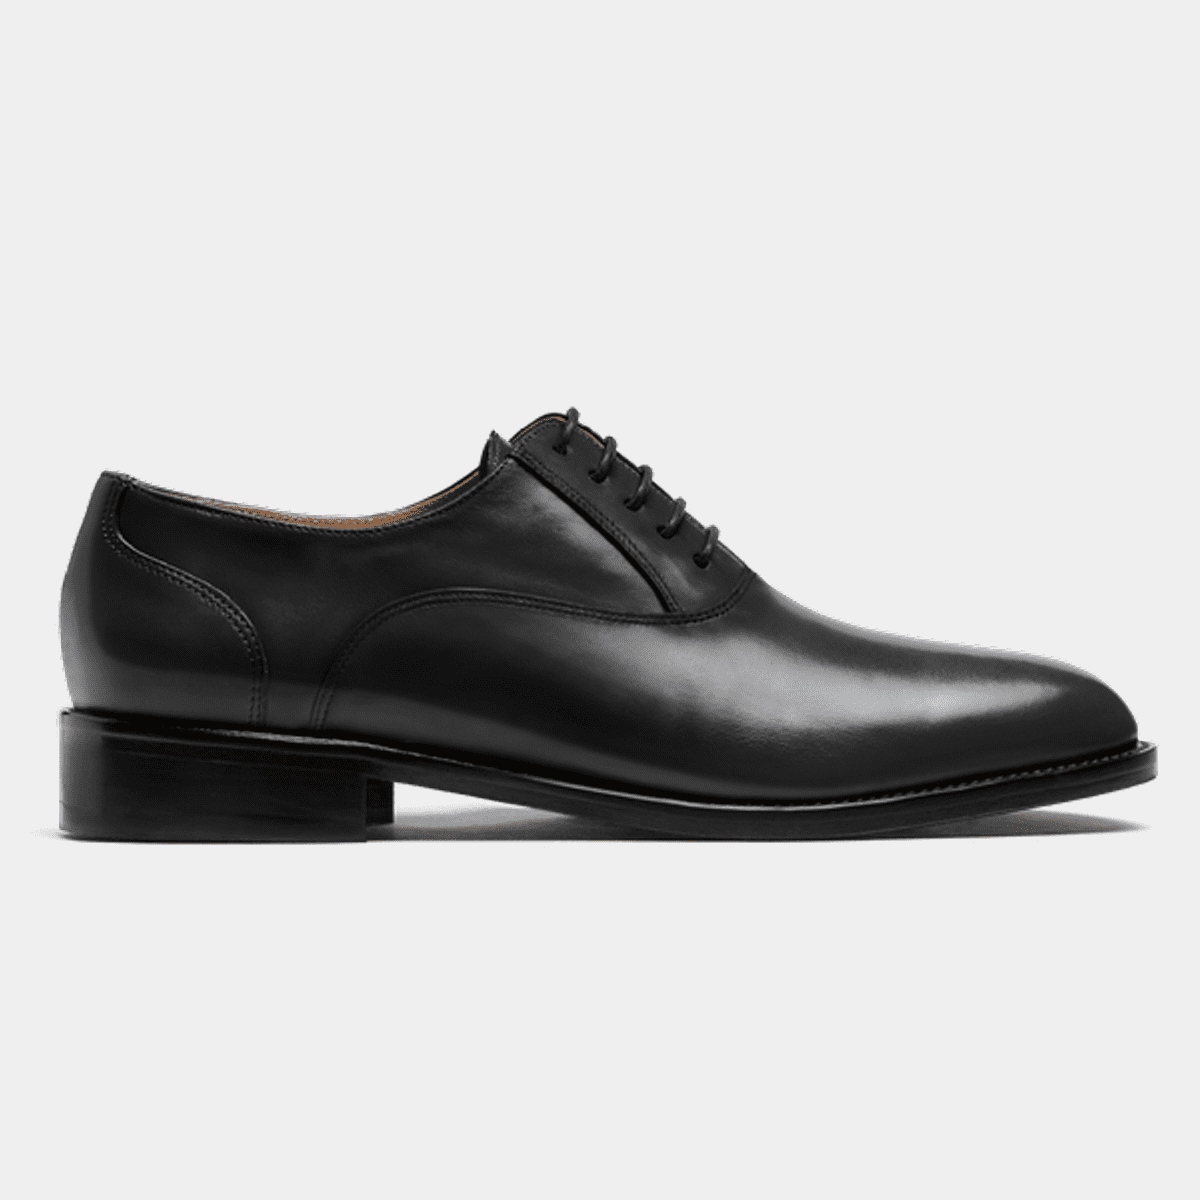 Oxford shoes - black italian calf leather